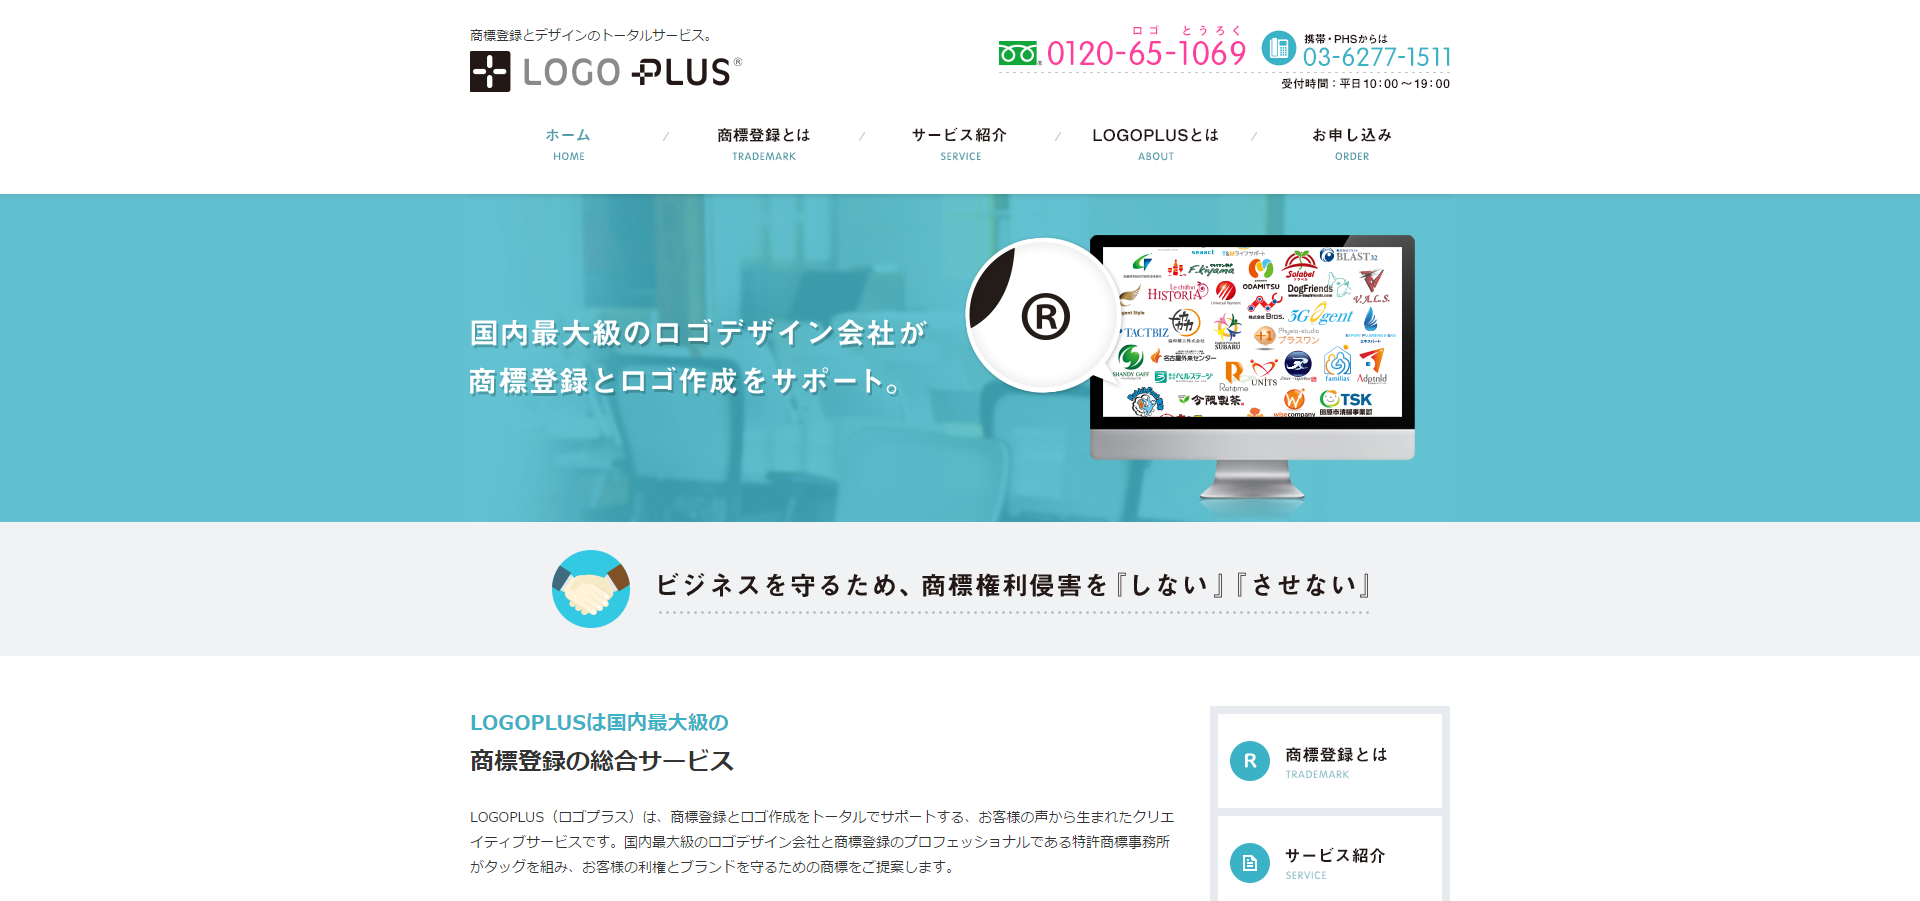 「LOGO PLUS」の公式サイト